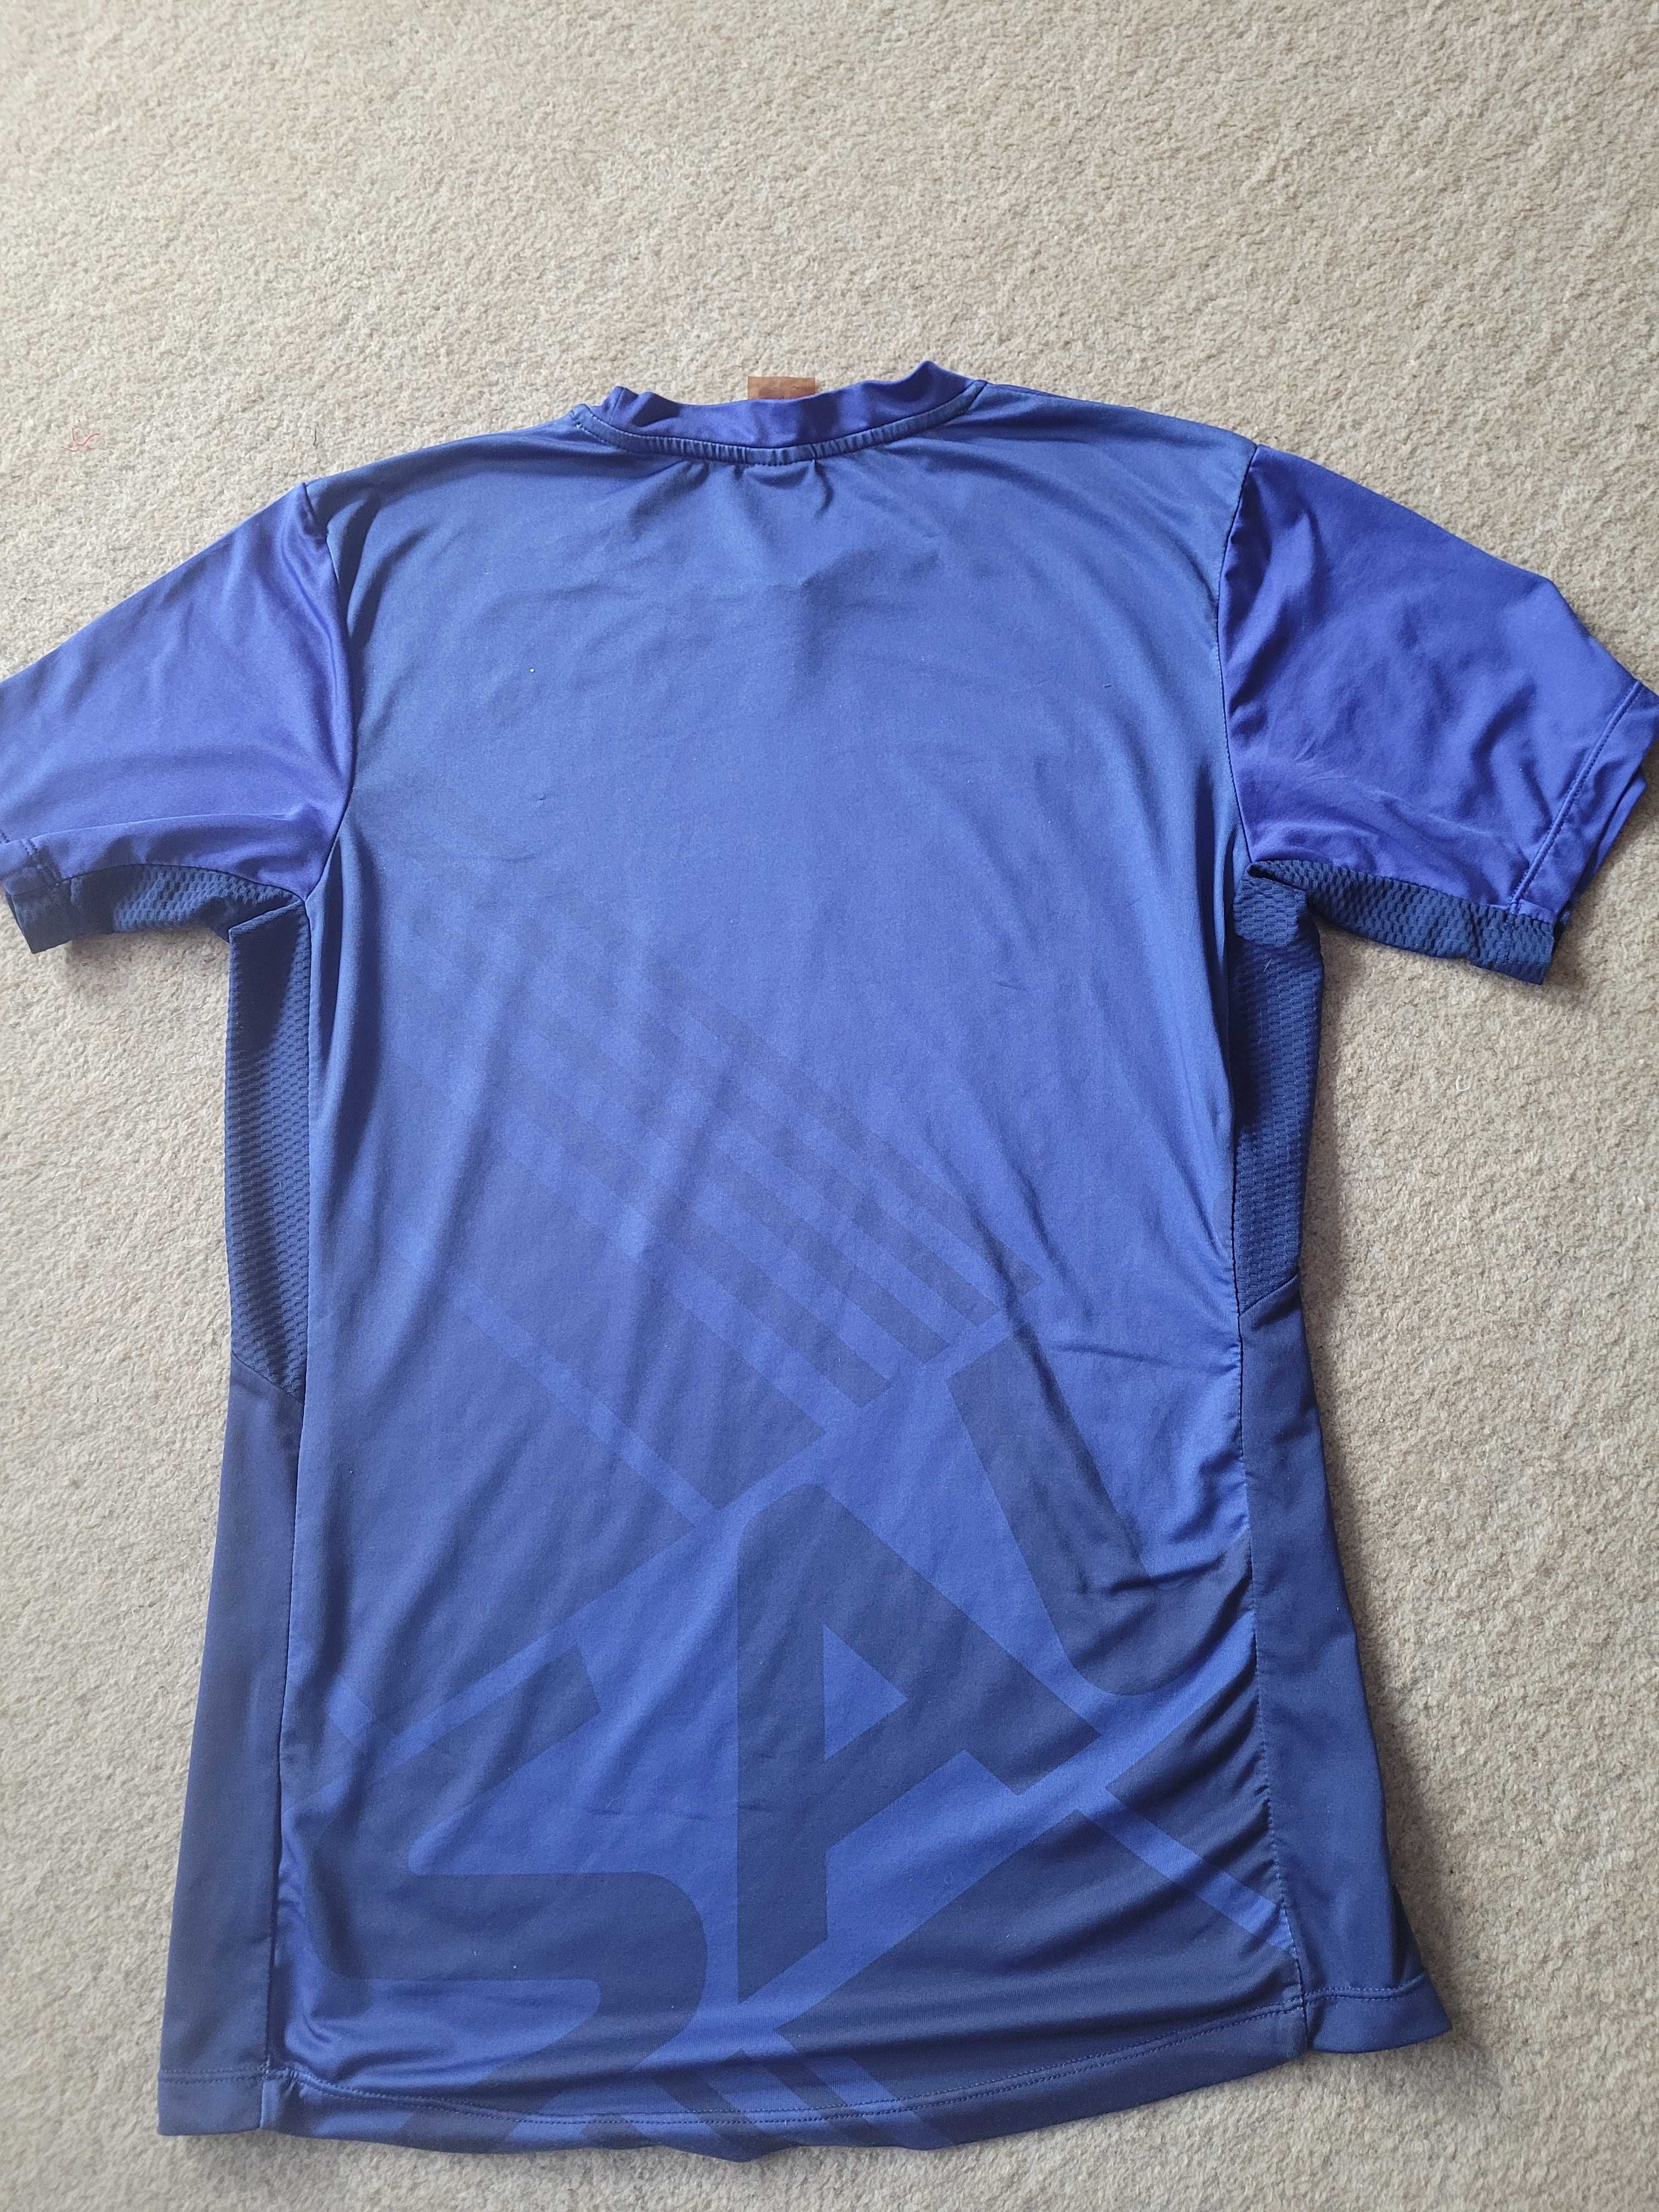 Salming koszulka bluzka treningowa sportowa s